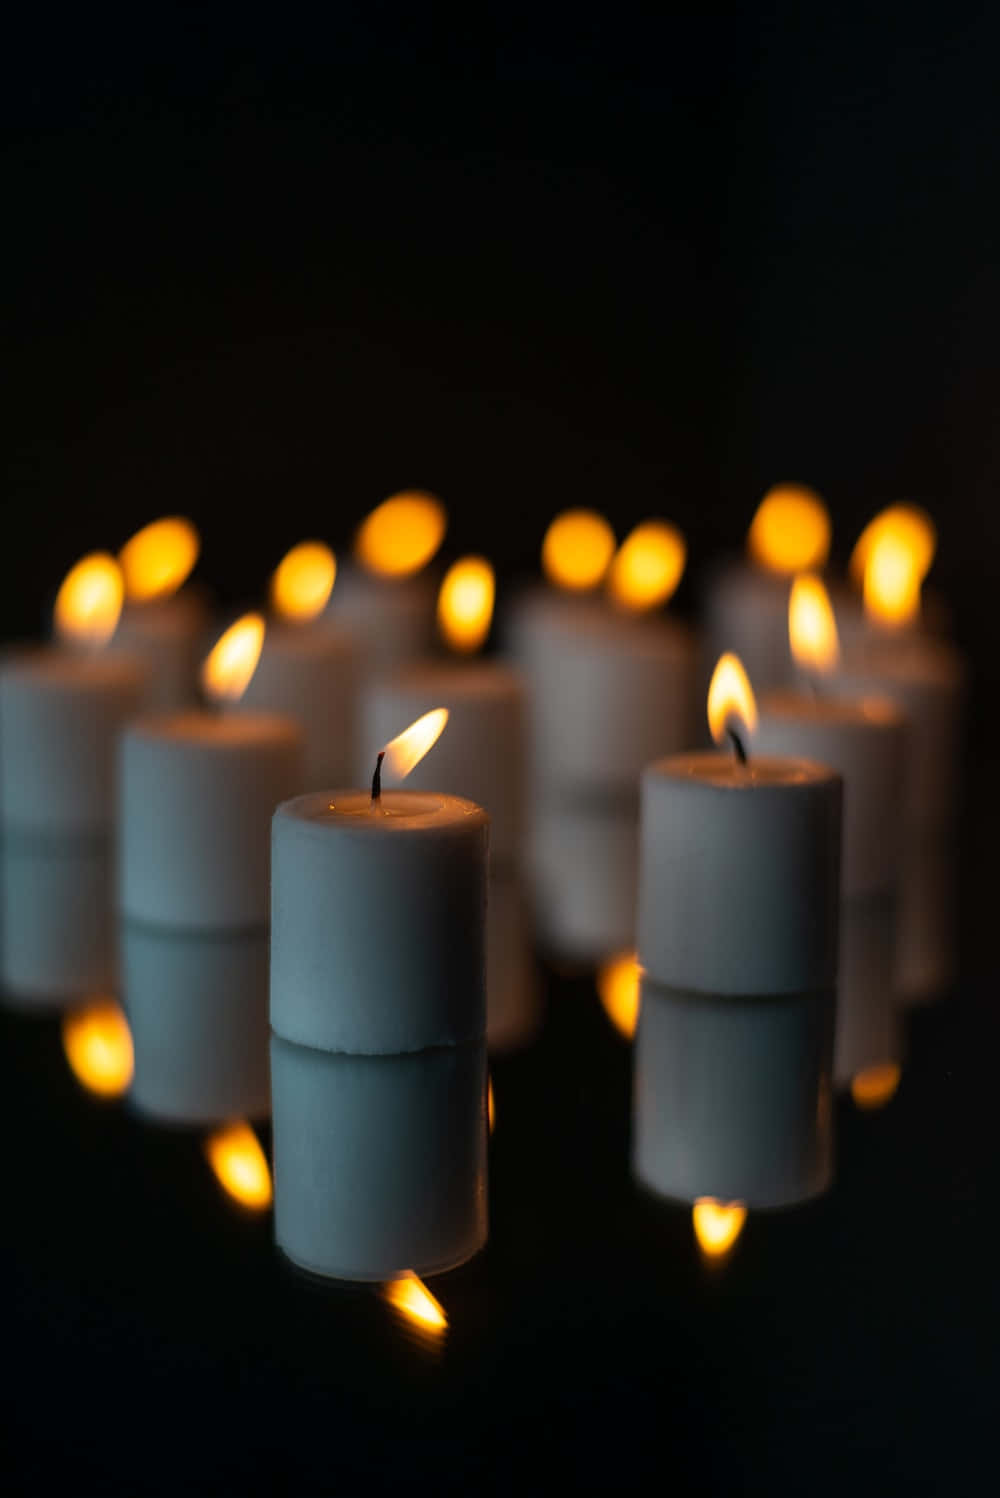 Image  Soft Candlelight Illuminates a Dark Room